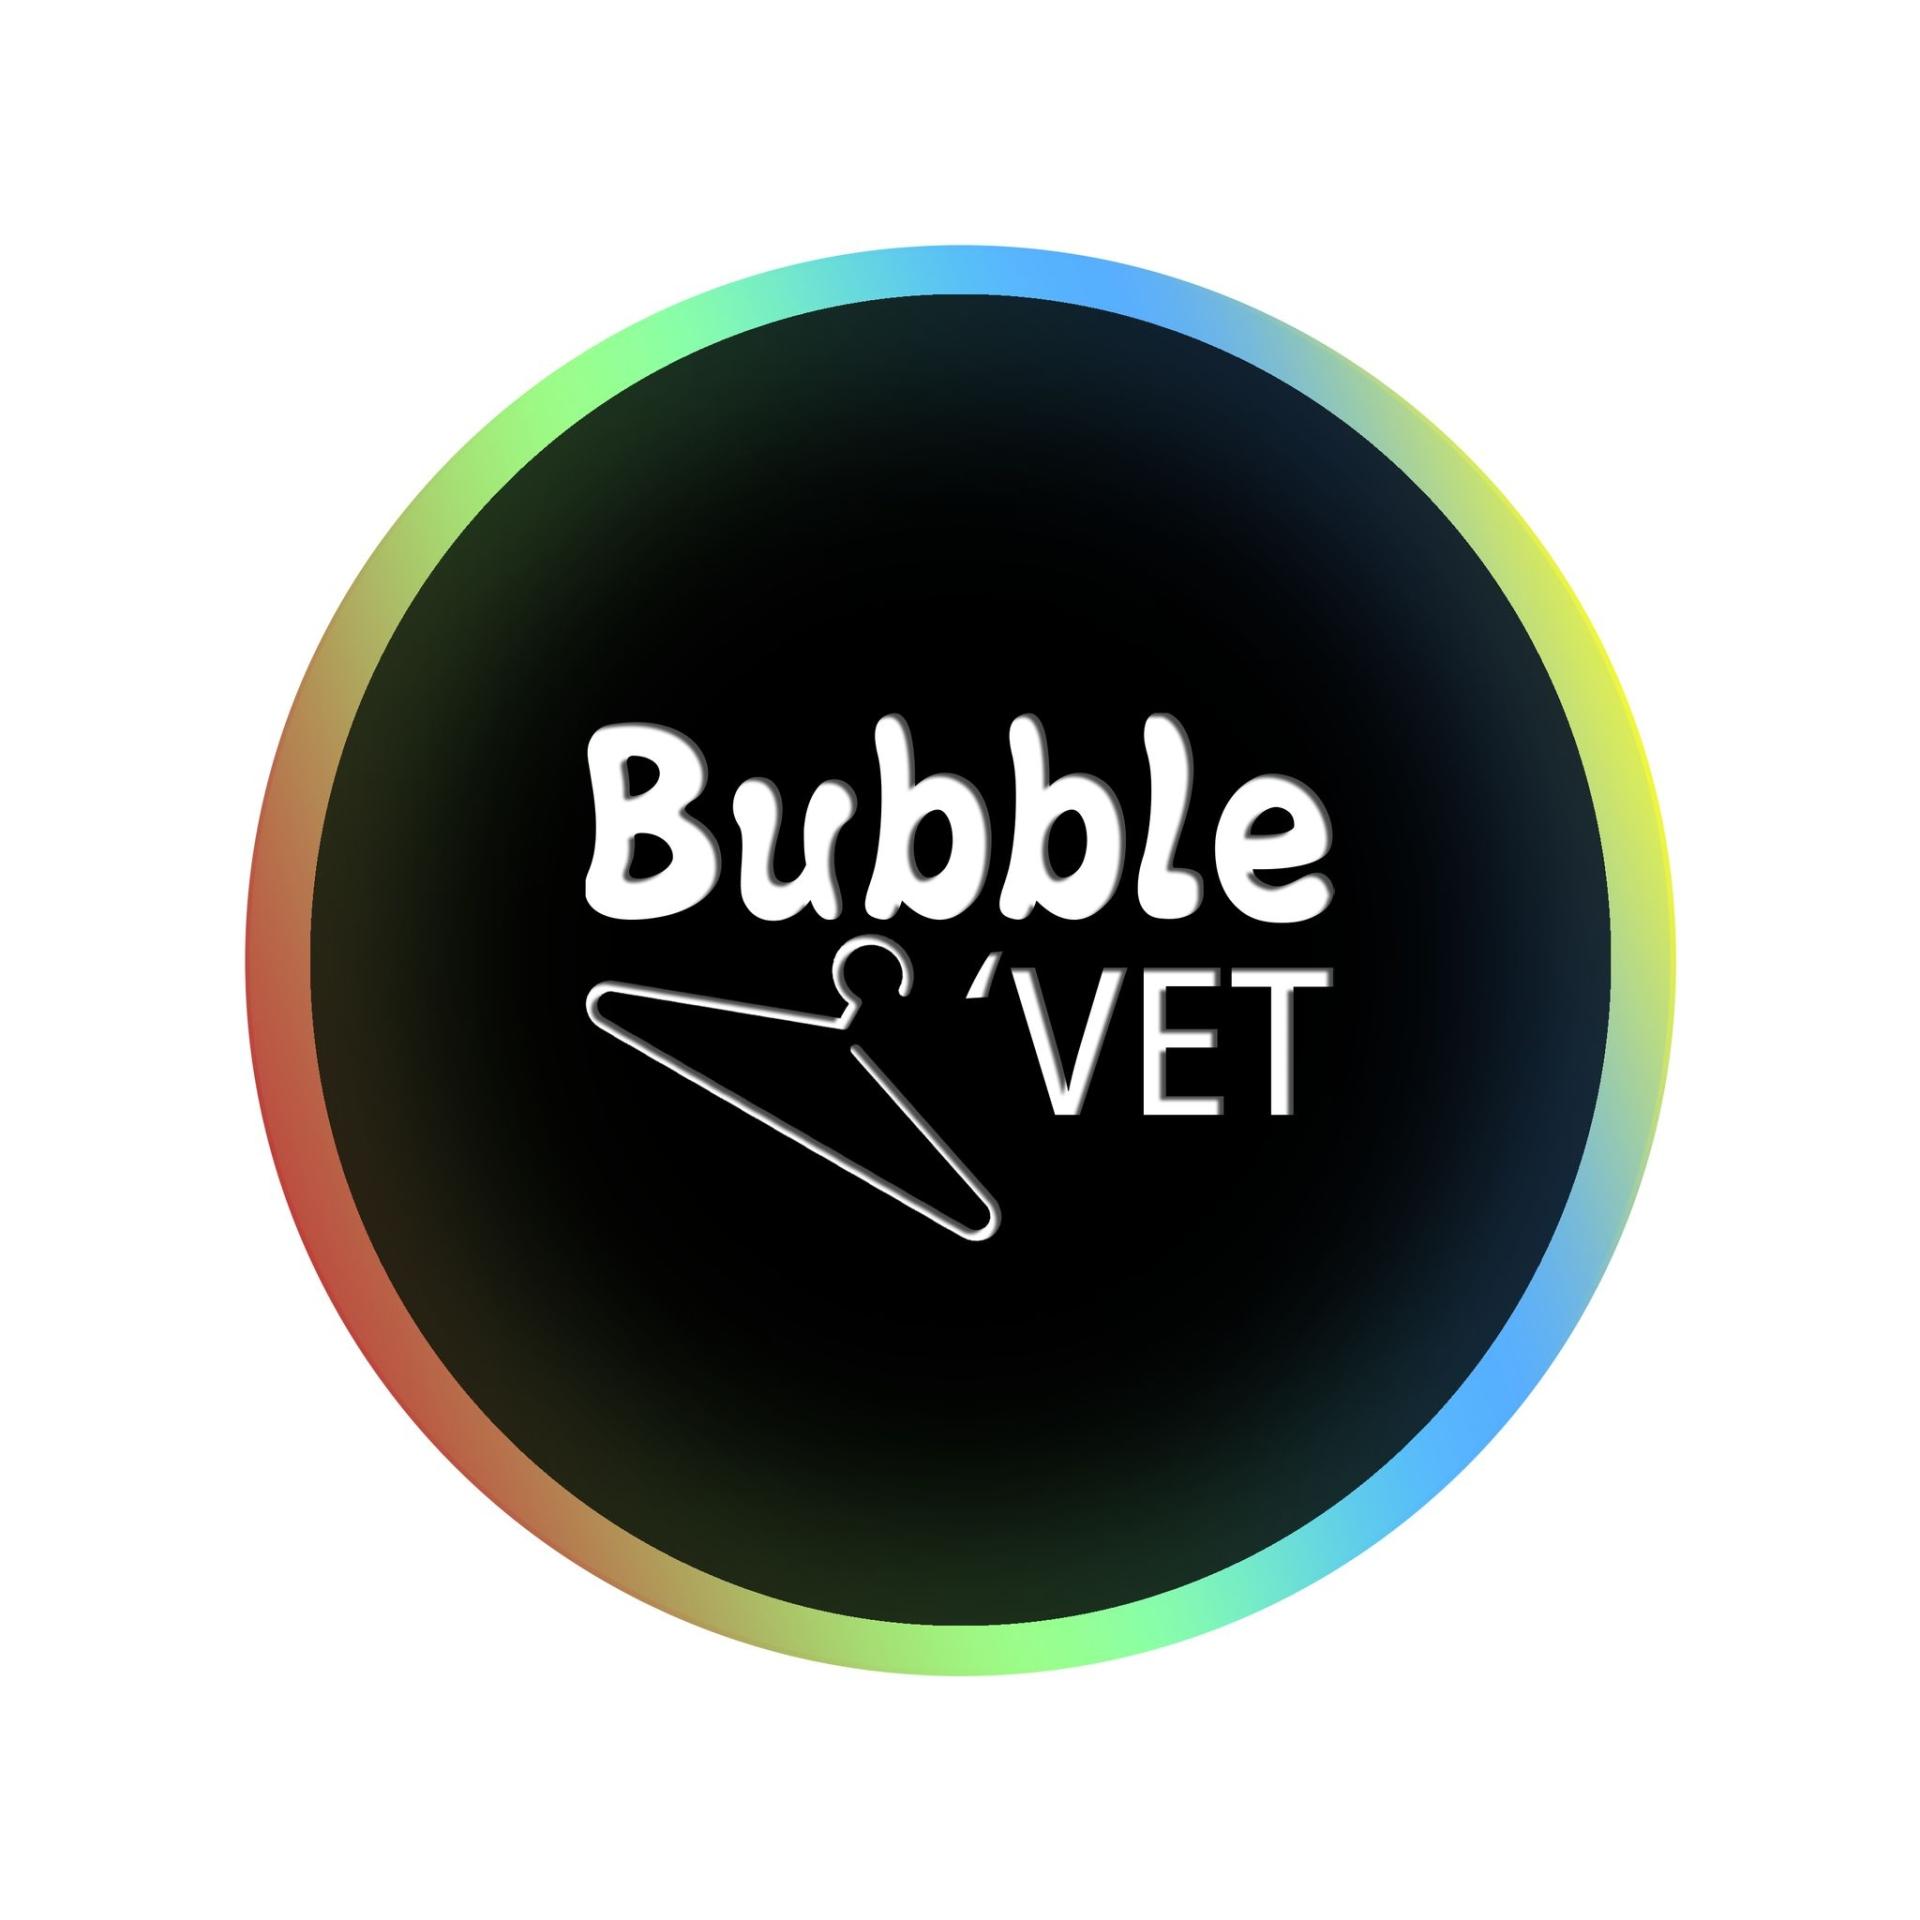 Bubble vet 